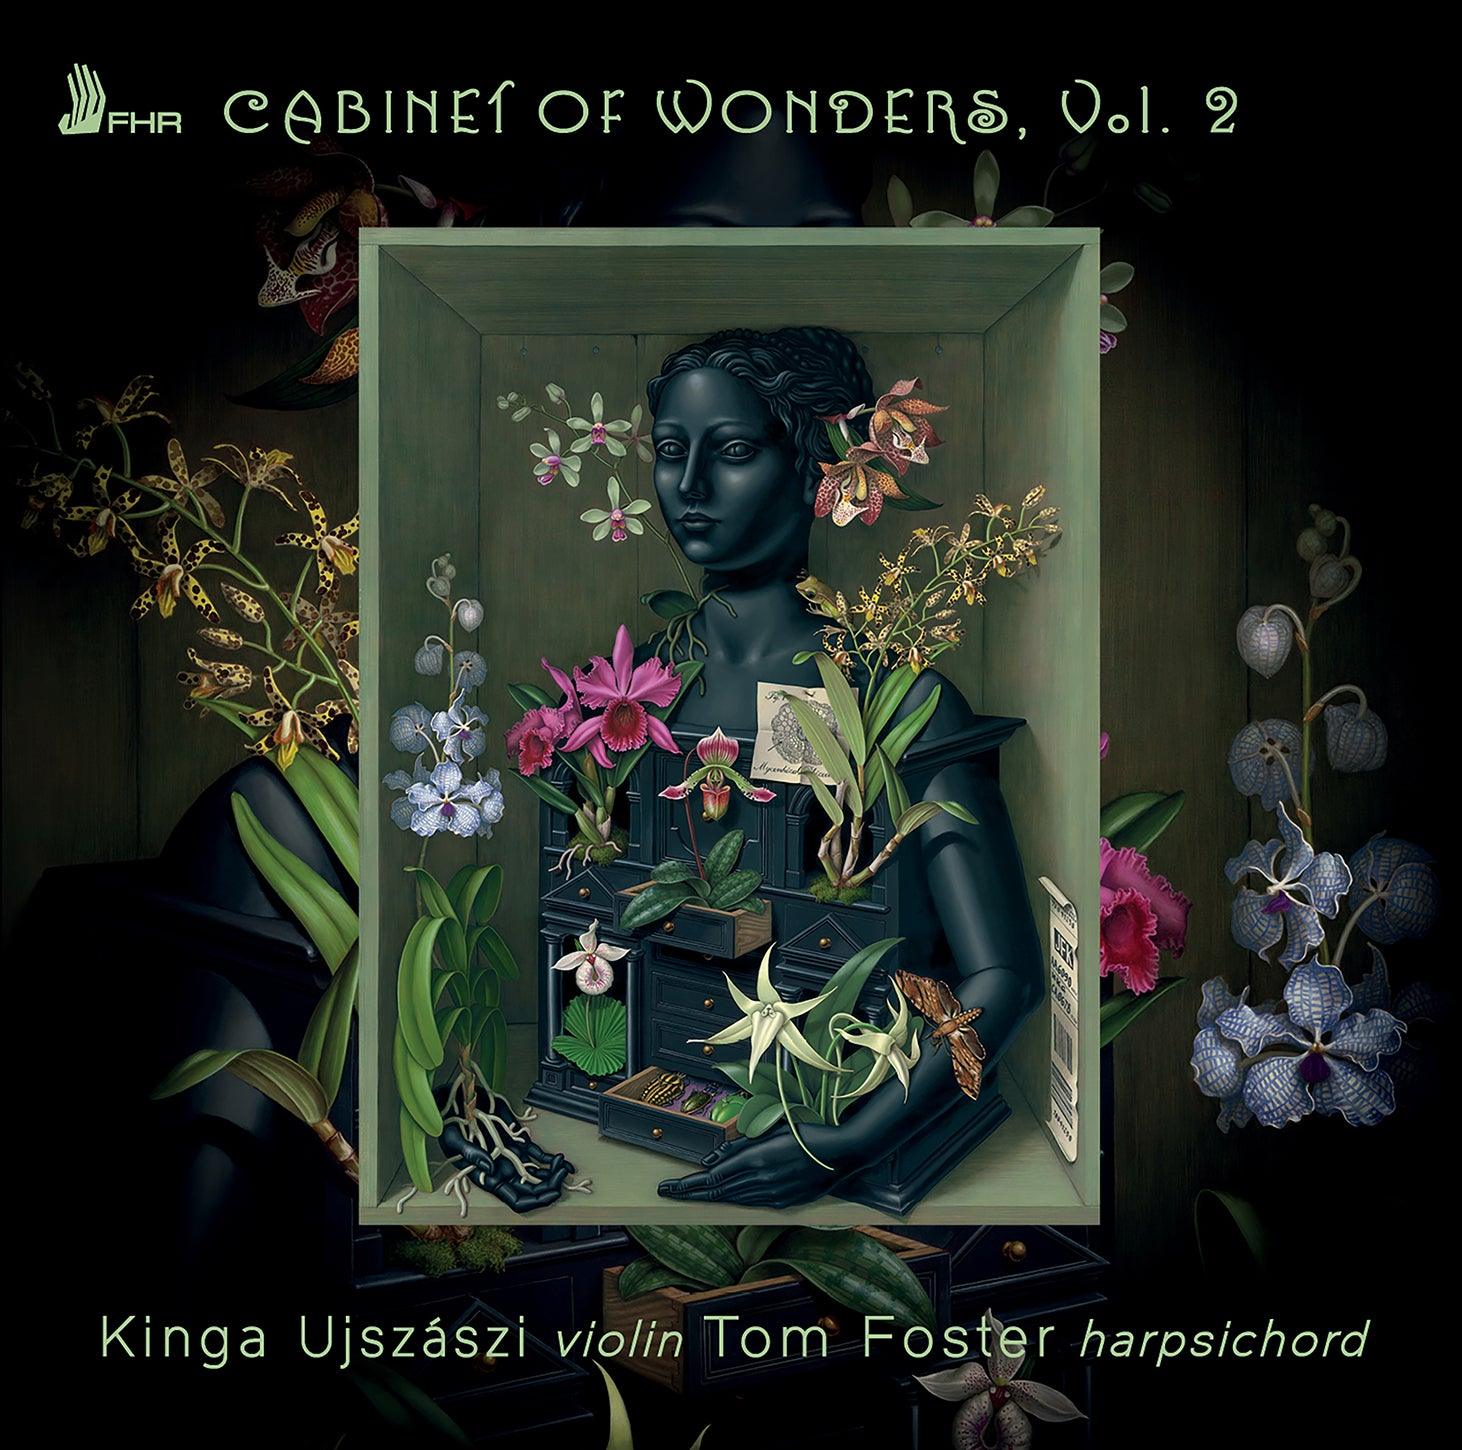 Cabinet of Wonders, Vol. 2 / Ujszászi, Foster - ArkivMusic